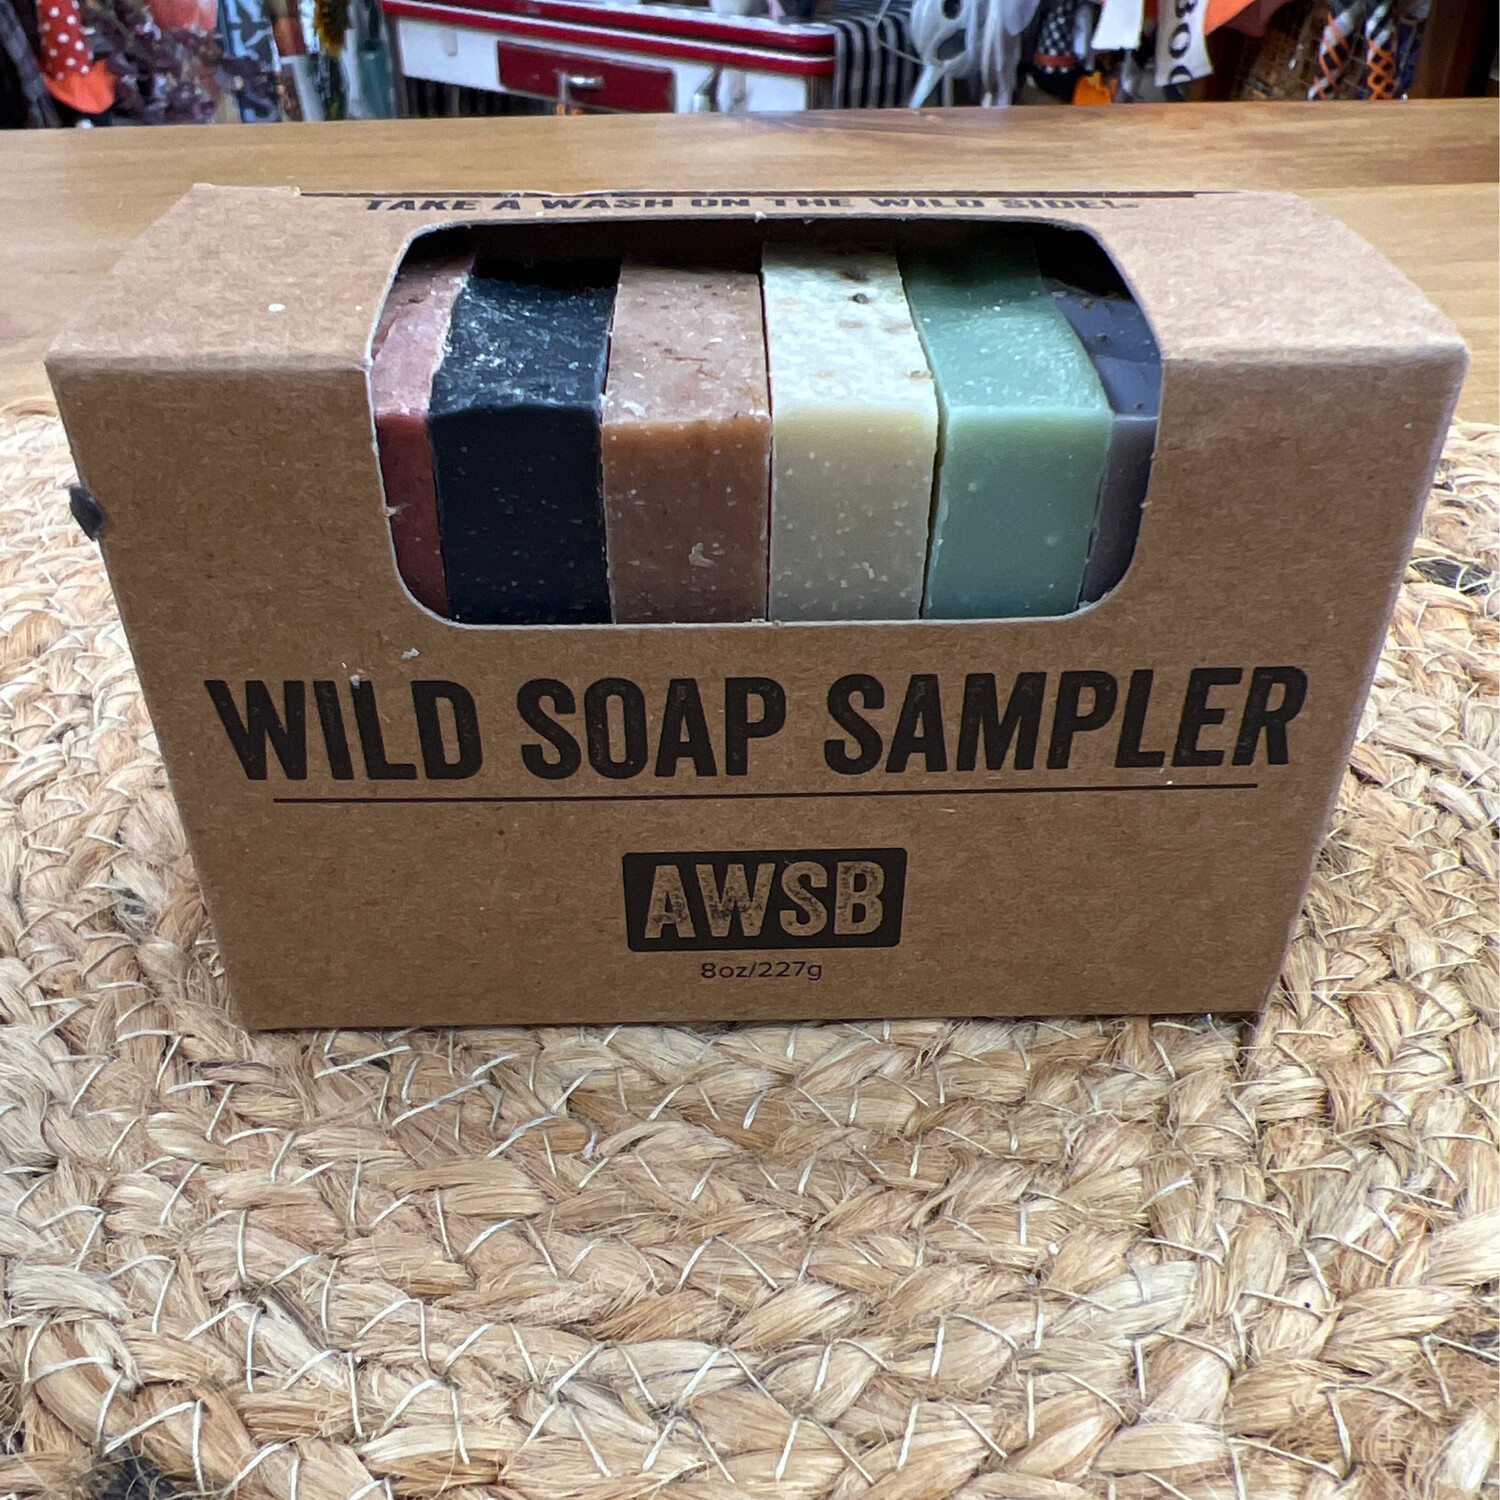 Wild Soap Co-Sampler